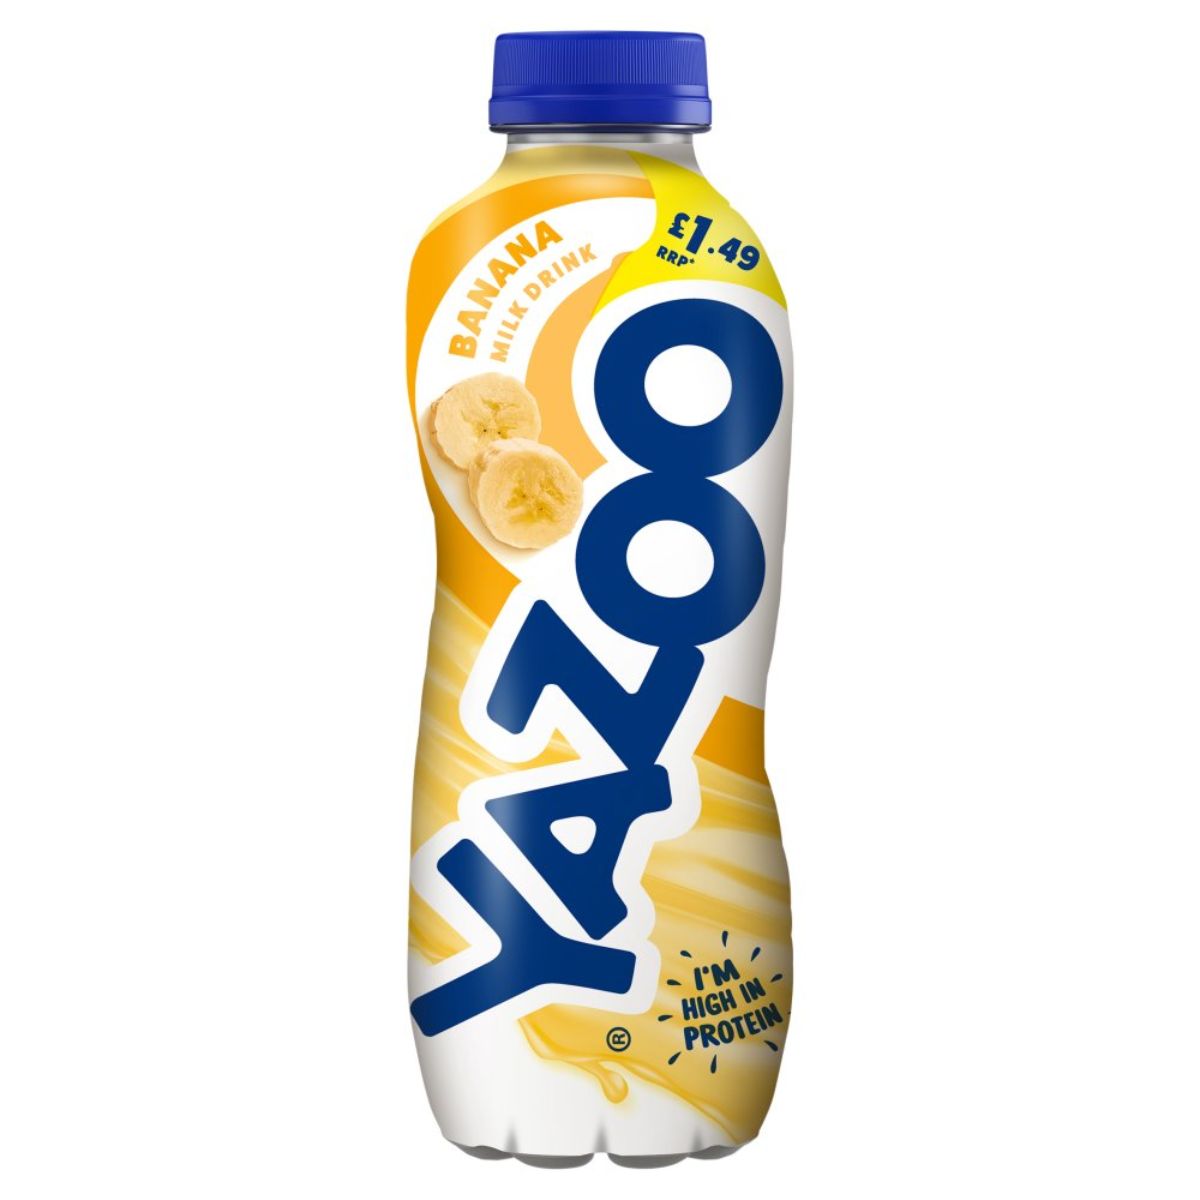 A bottle of Yazoo - Banana - 400ml on a white background.